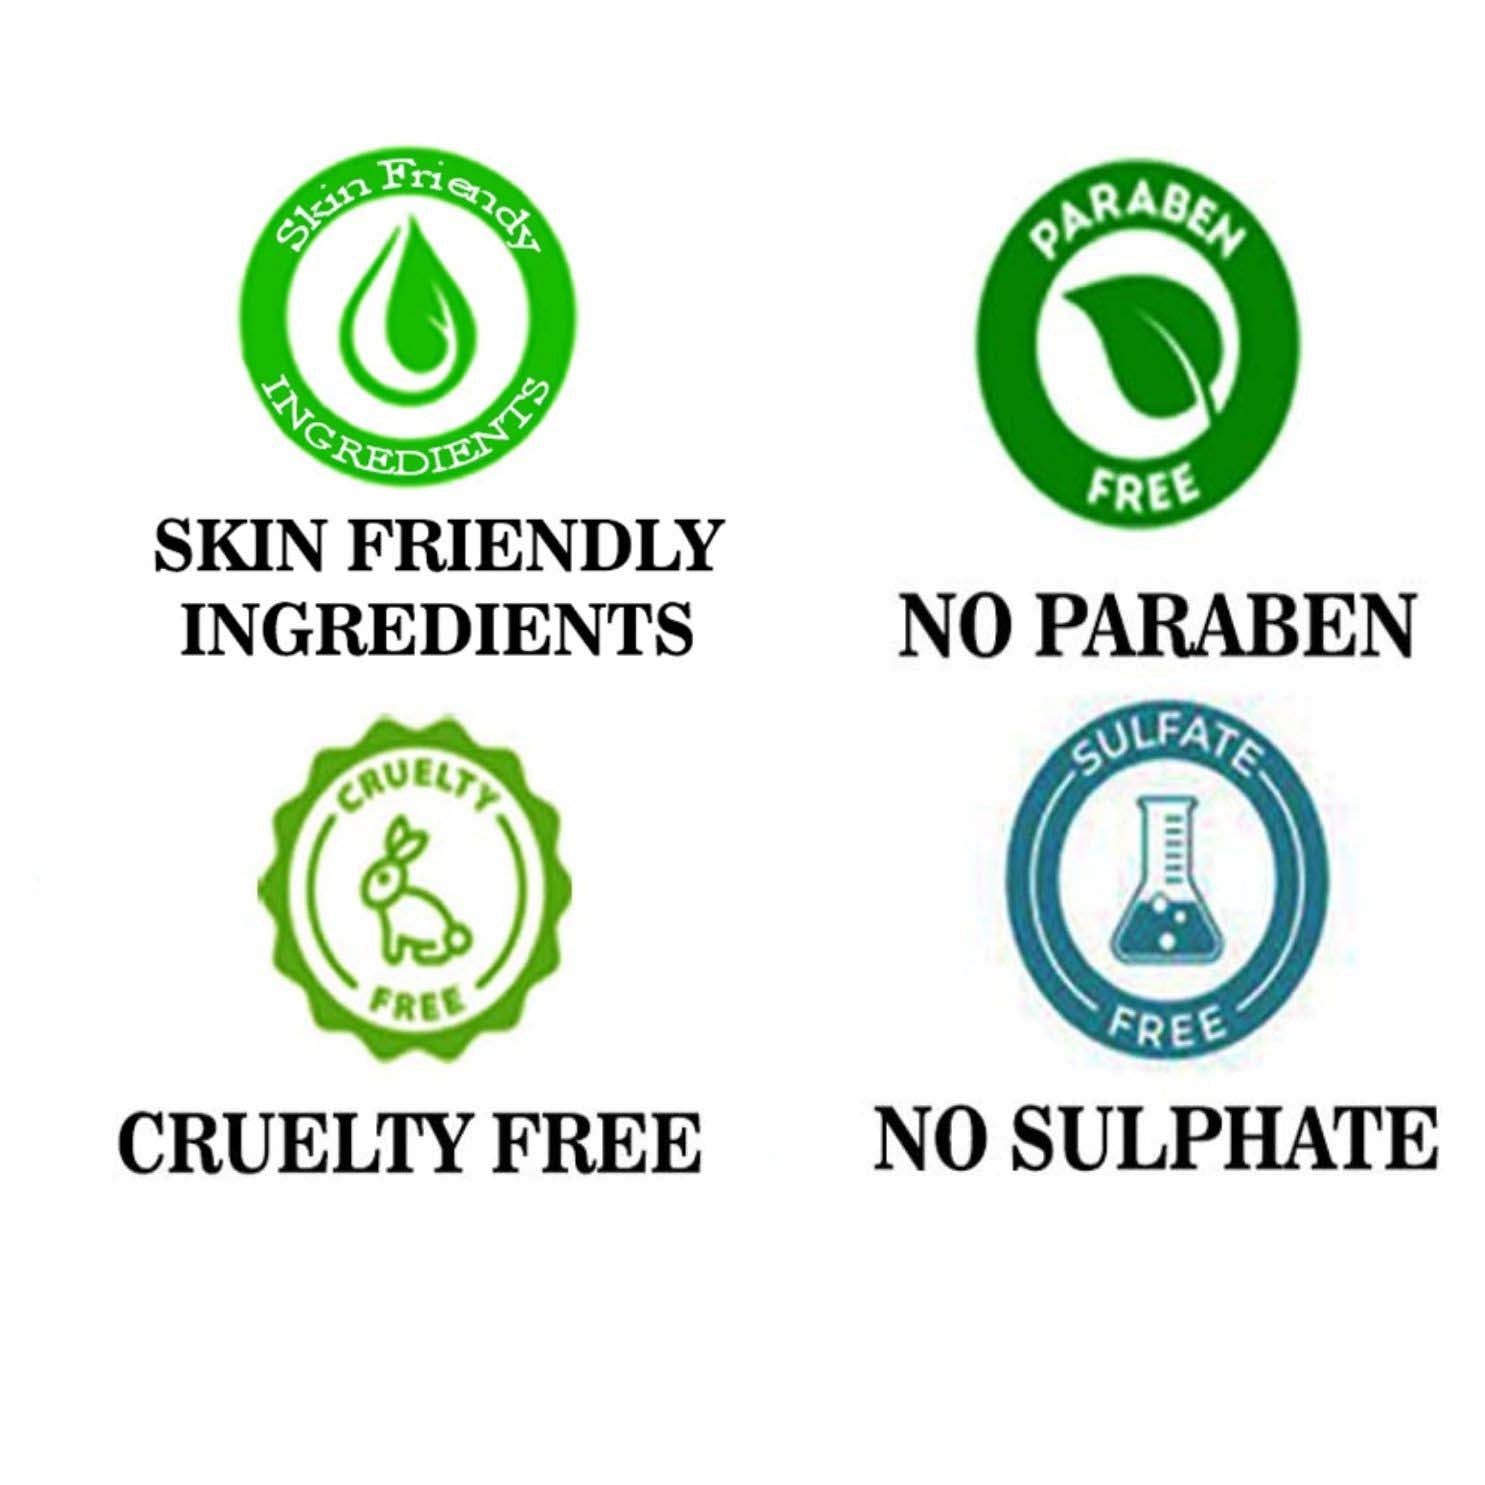 urbaano herbal skin brightening facial kit is  sulphate, paraben, cruelty free. it is safe & skin  friendly